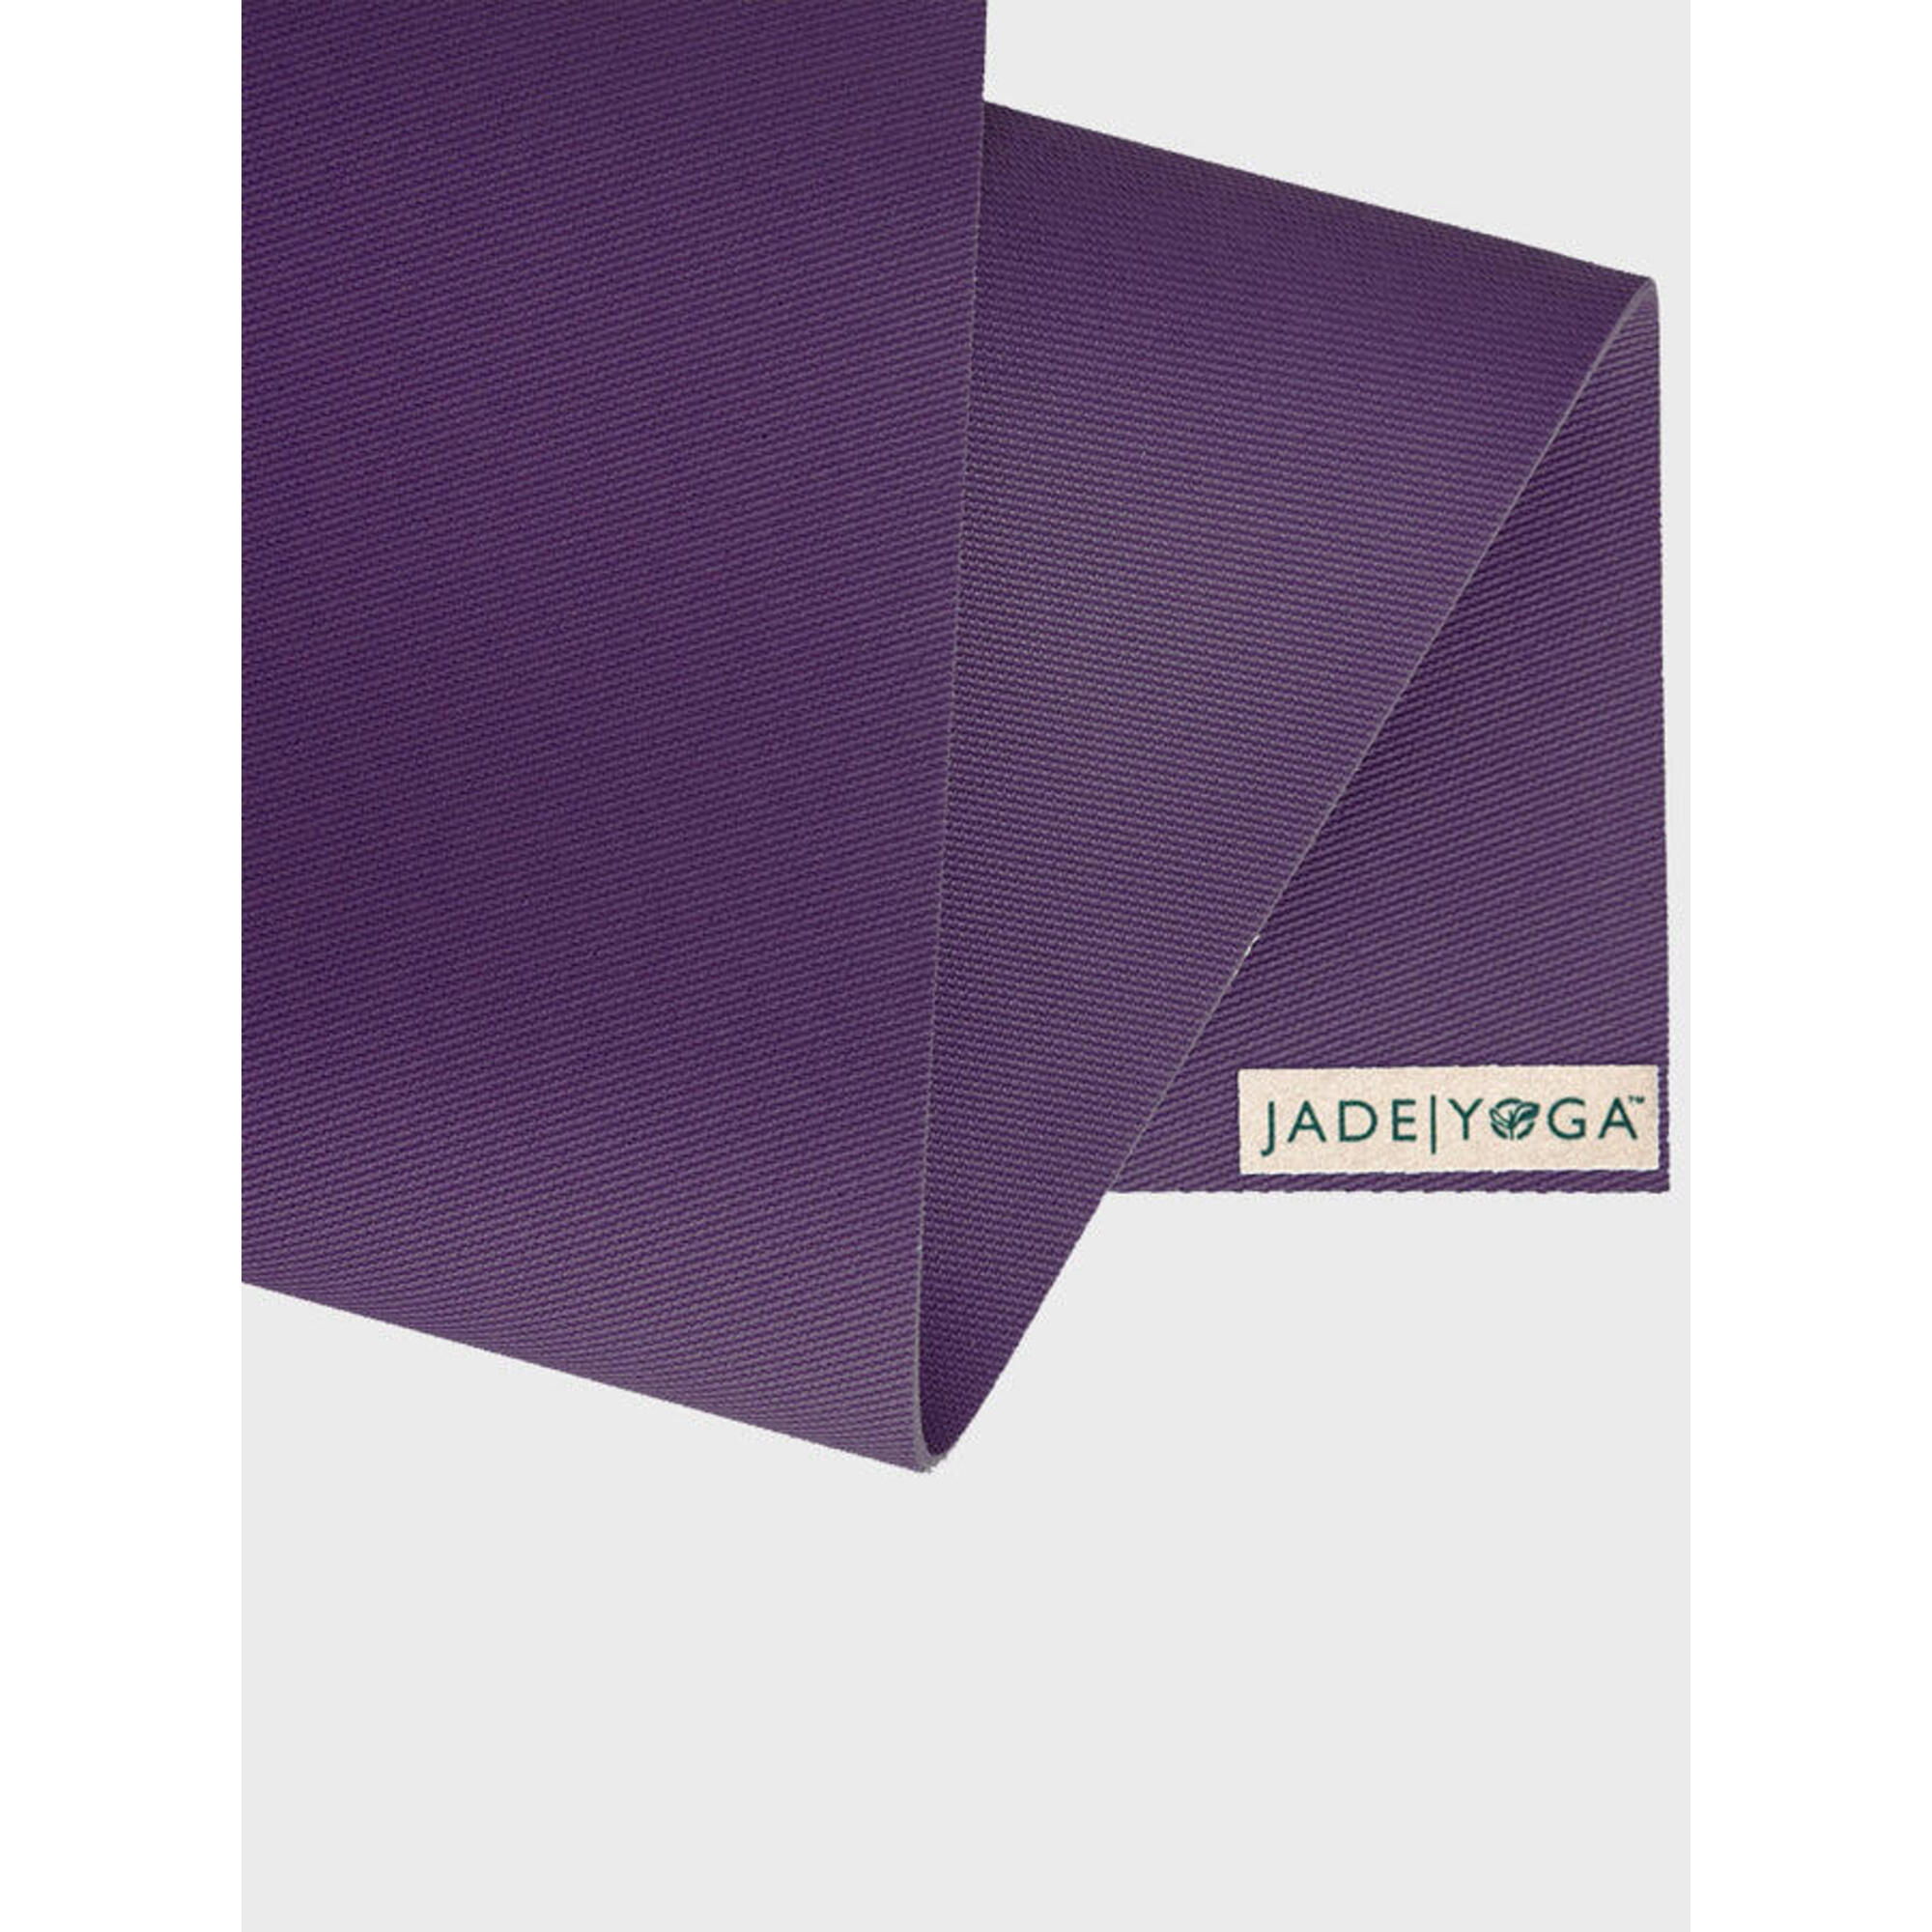 Jade Yoga Harmony 68 Inch Yoga Mat 5mm - Purple 1/1